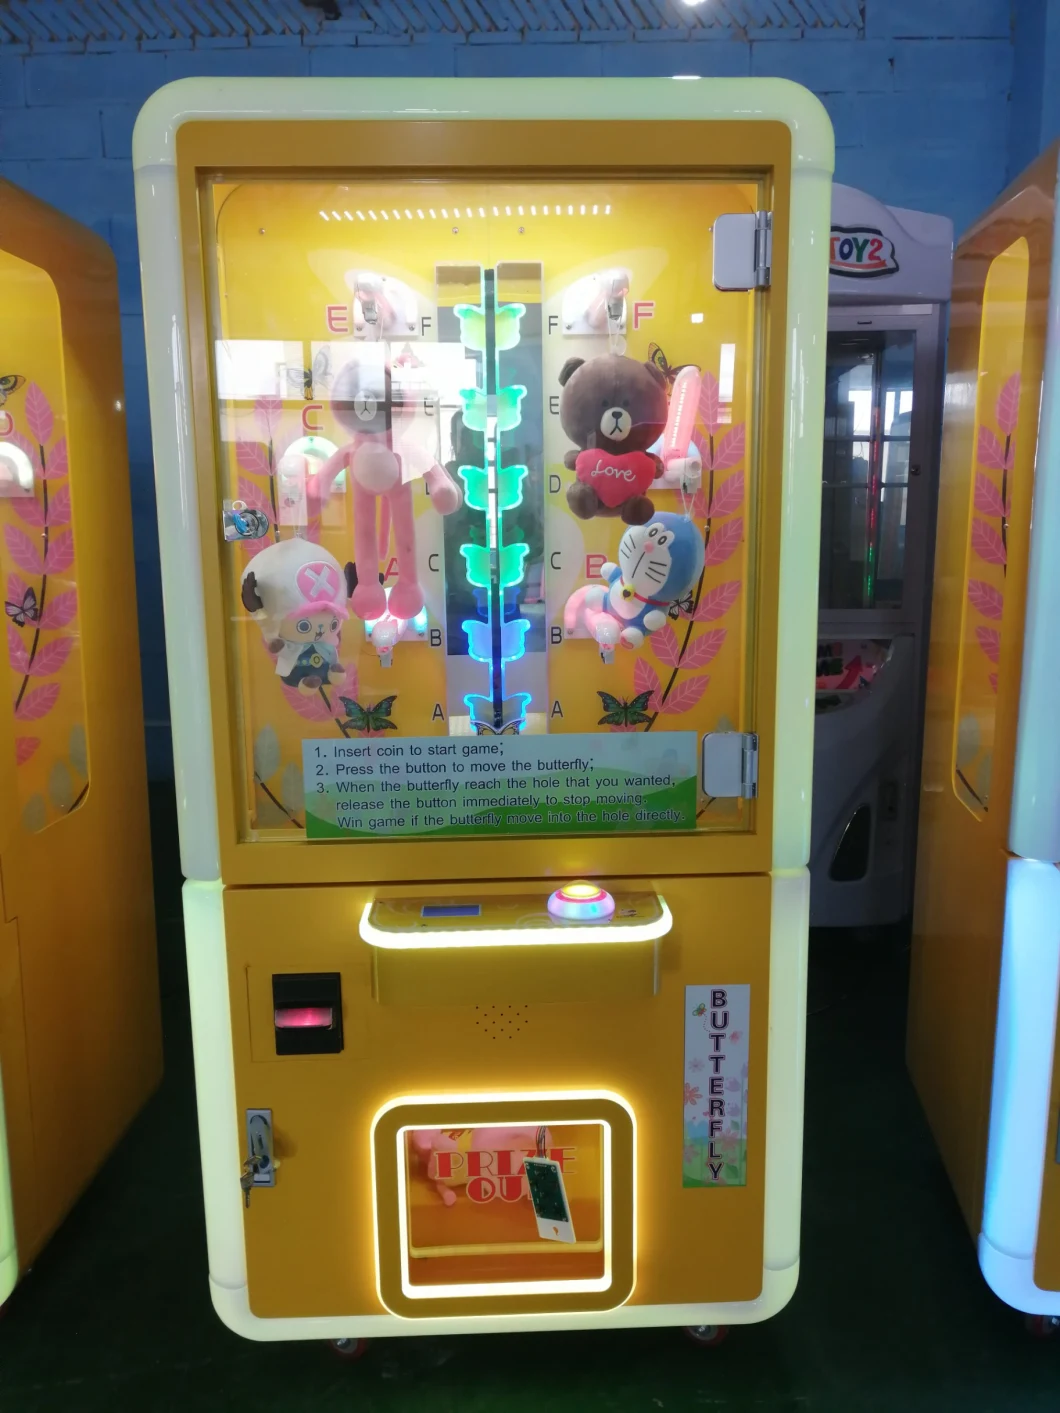 Butterfly/Prize/Toy Vending/Price/Vending/Amusement/Arcade/Crane Claw/Toy Crane/Arcade Claw/Claw Crane /Claw/Crane/Game Machine